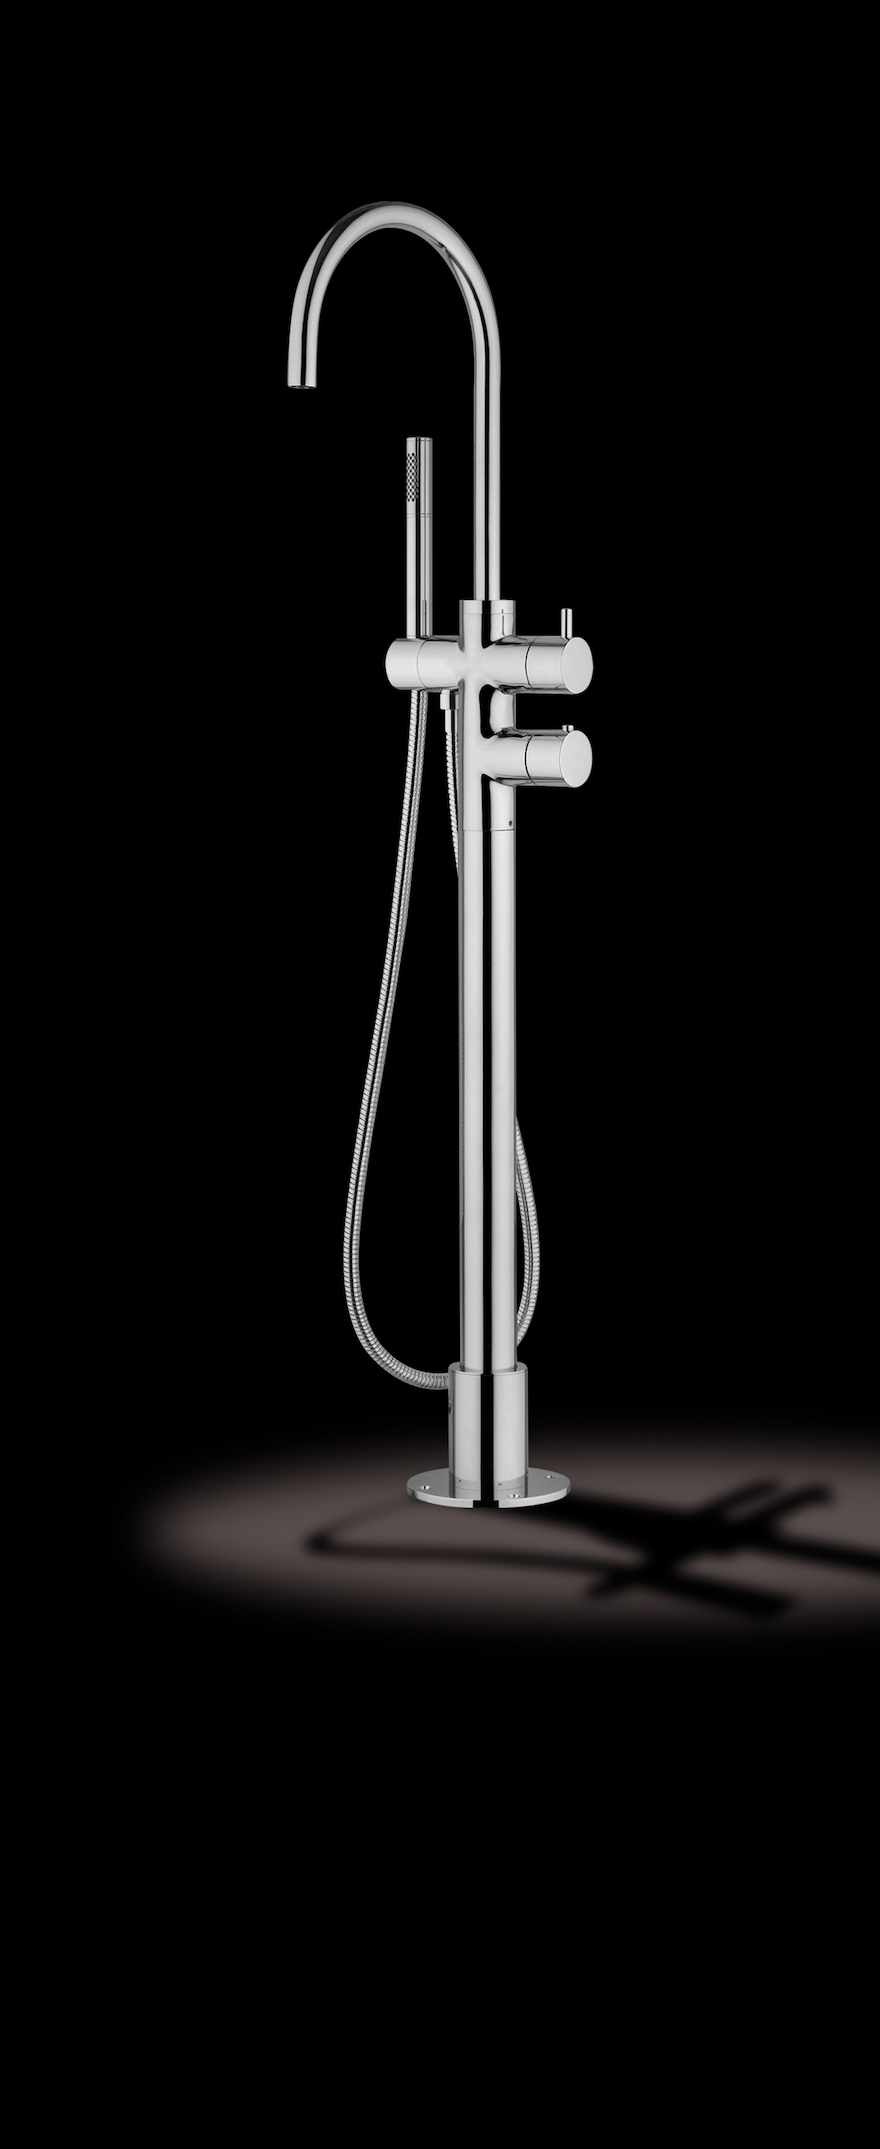 Foto 1 - Miscelatore termostatico per vasca OMBG.  Affidabilità e design all’avanguardia